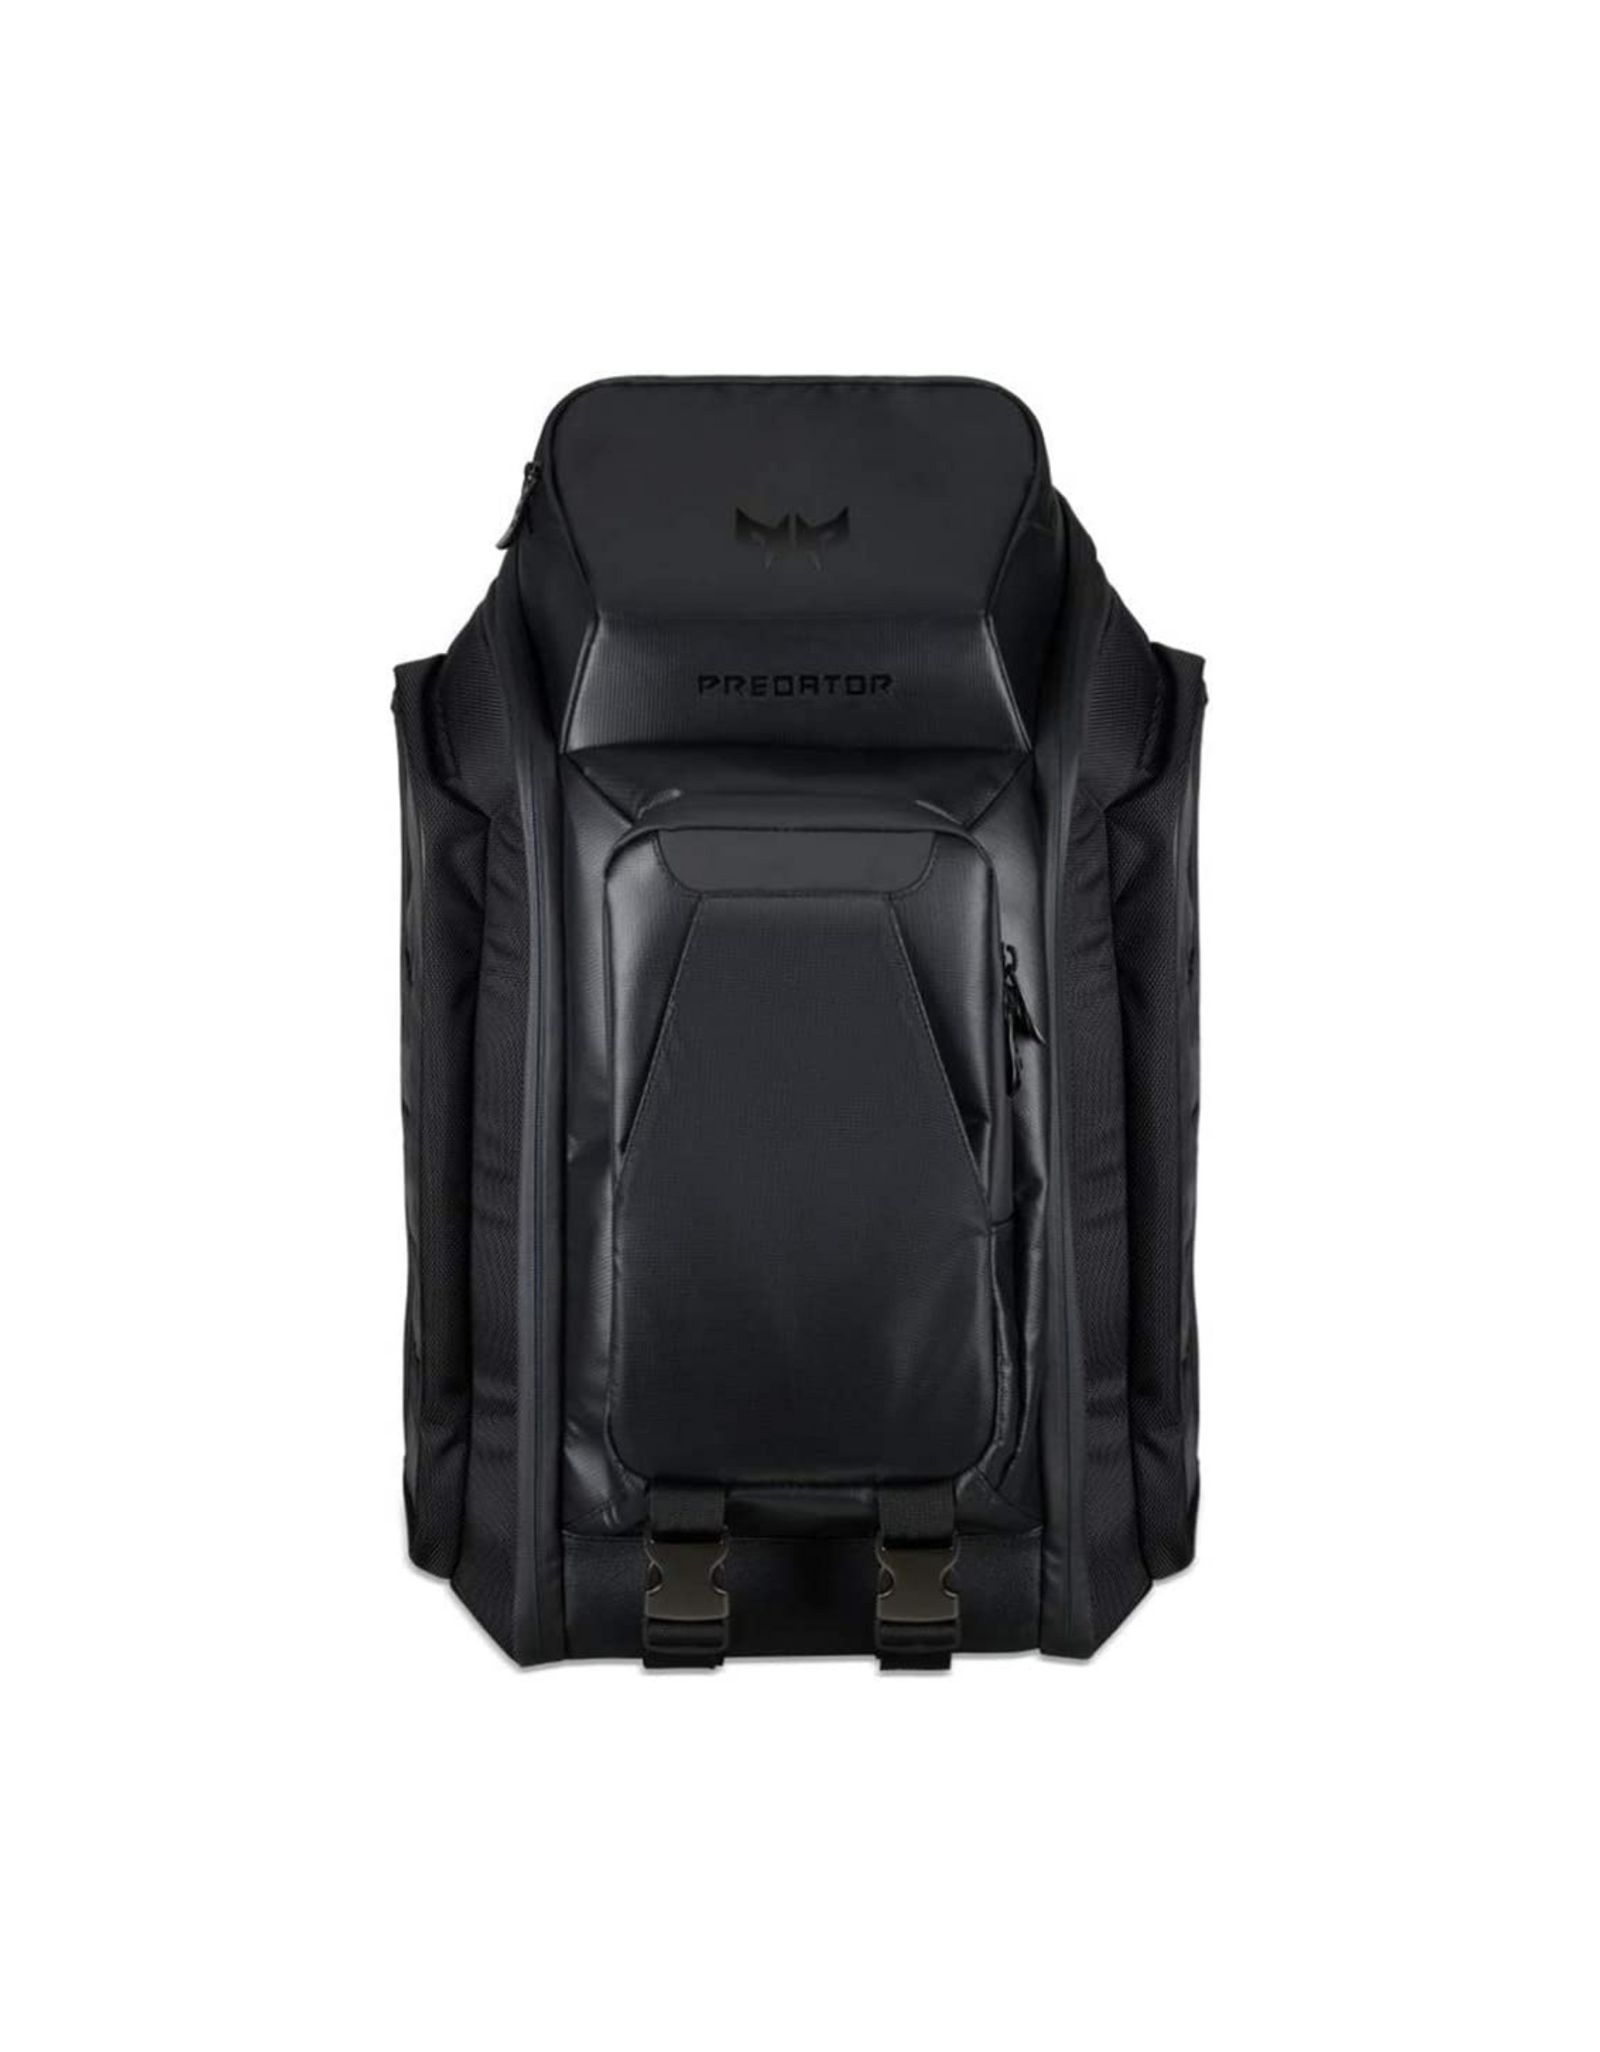 Acer Predator M-Utility Backpack for Up to 17" Laptop (PBG920), Black